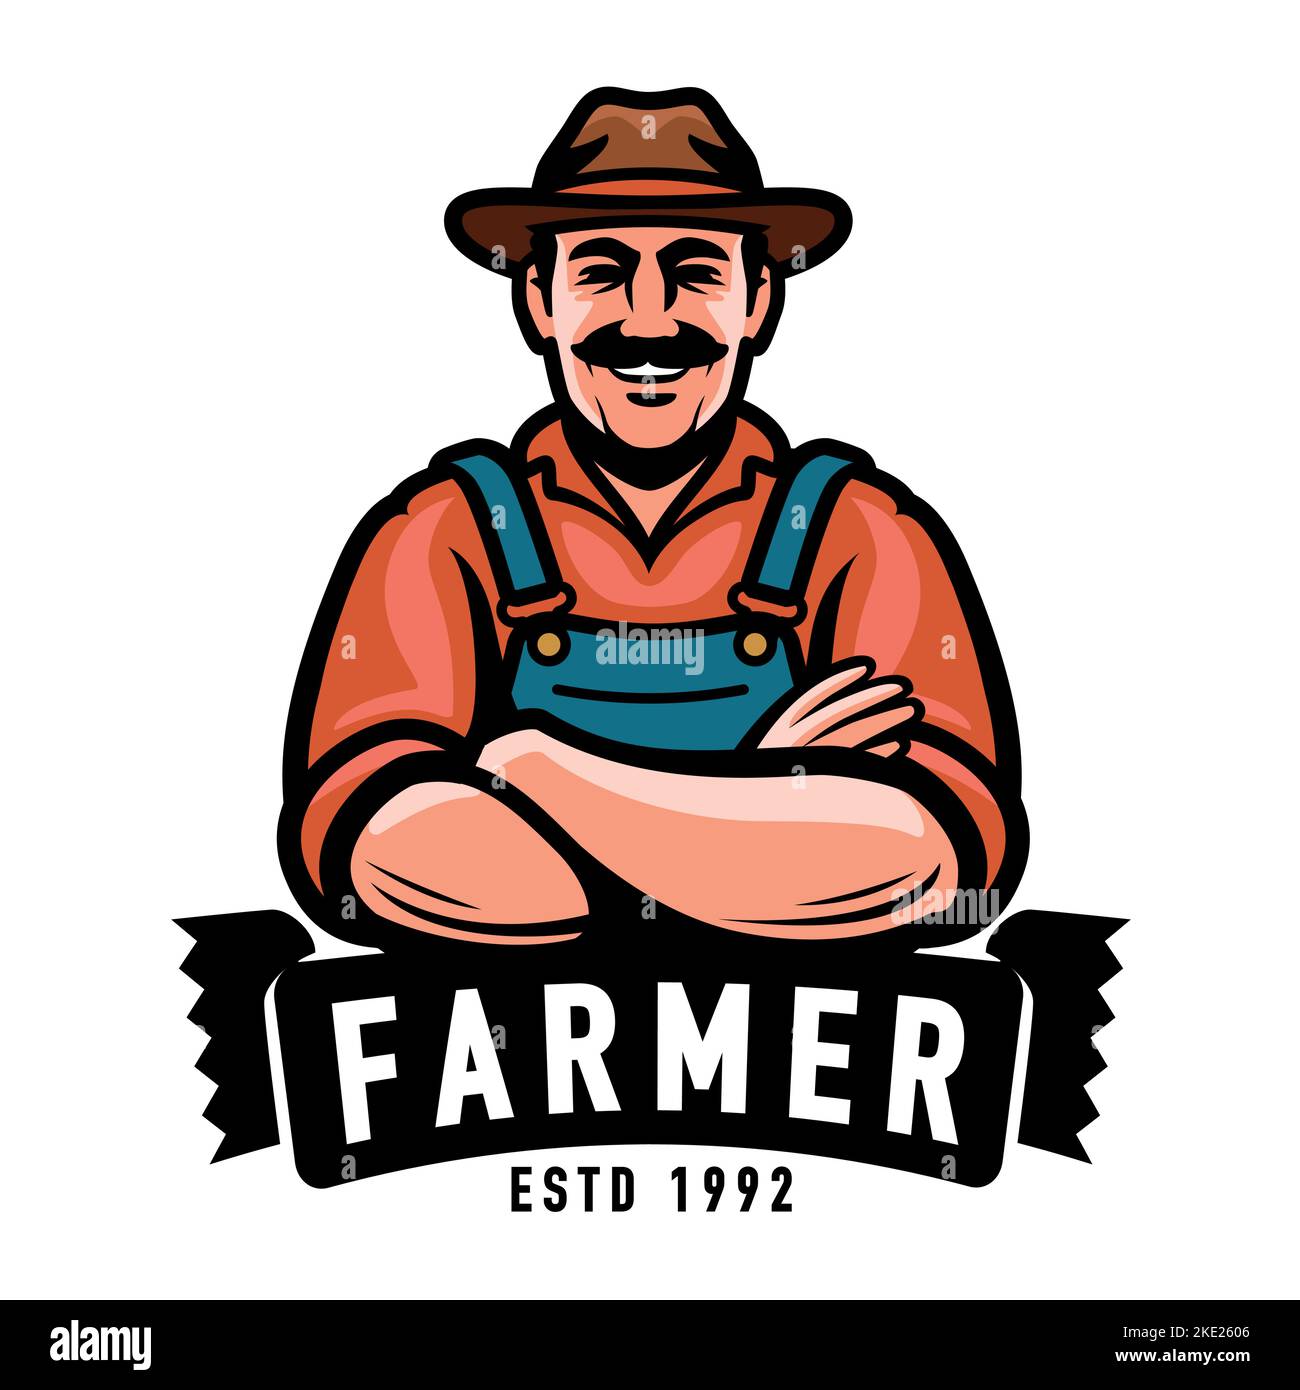 Farmer emblem. Happy male farm worker in hat symbol or logo. Agriculture, farming concept vector illustration Stock Vector